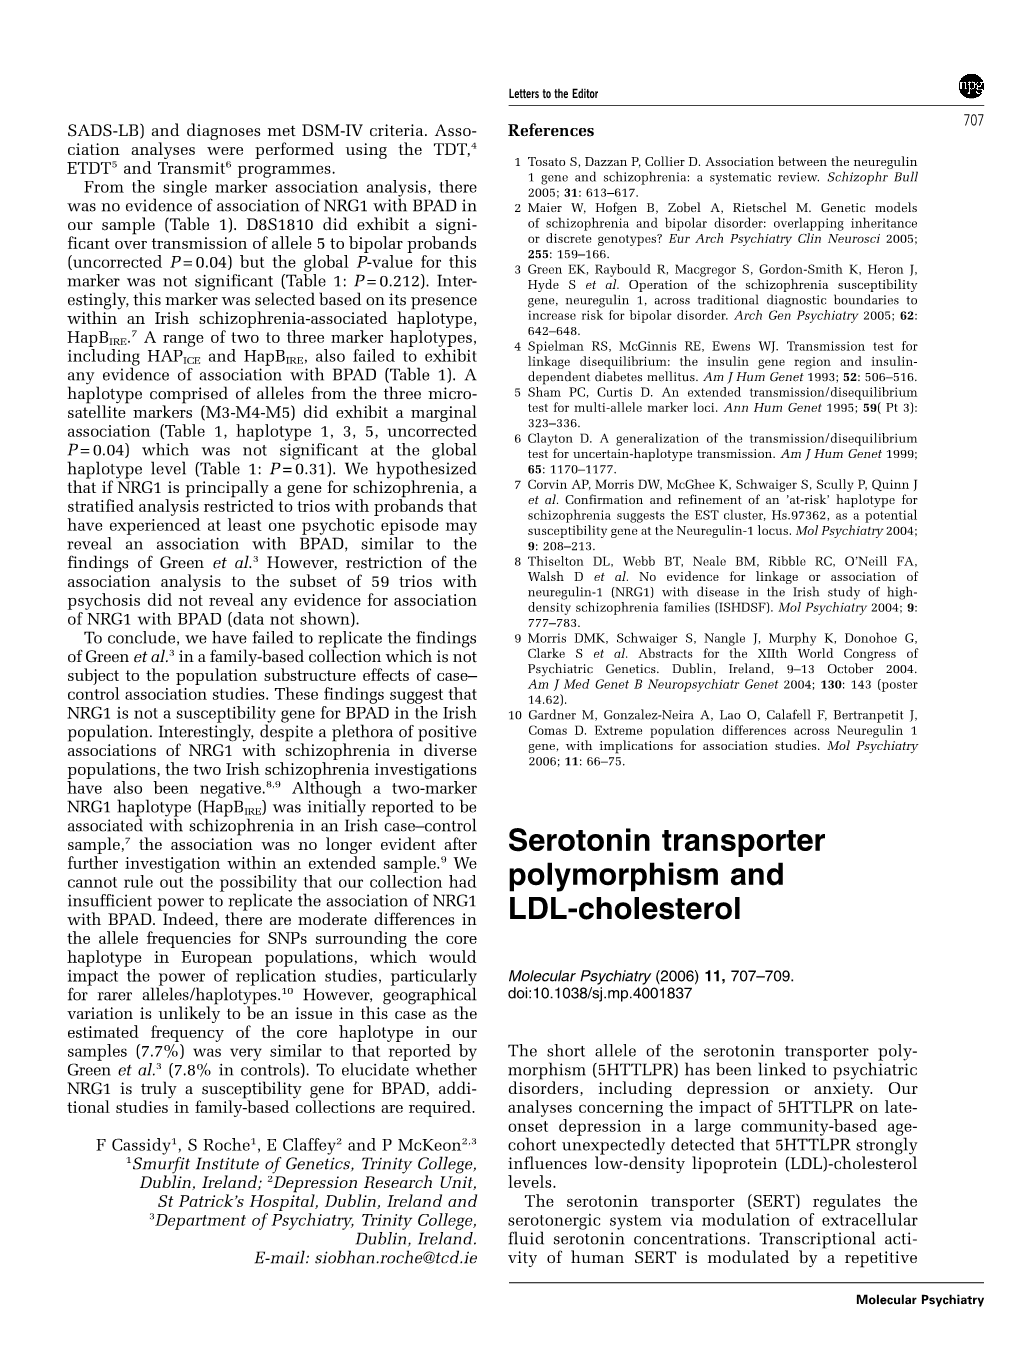 Serotonin Transporter Polymorphism and LDL-Cholesterol